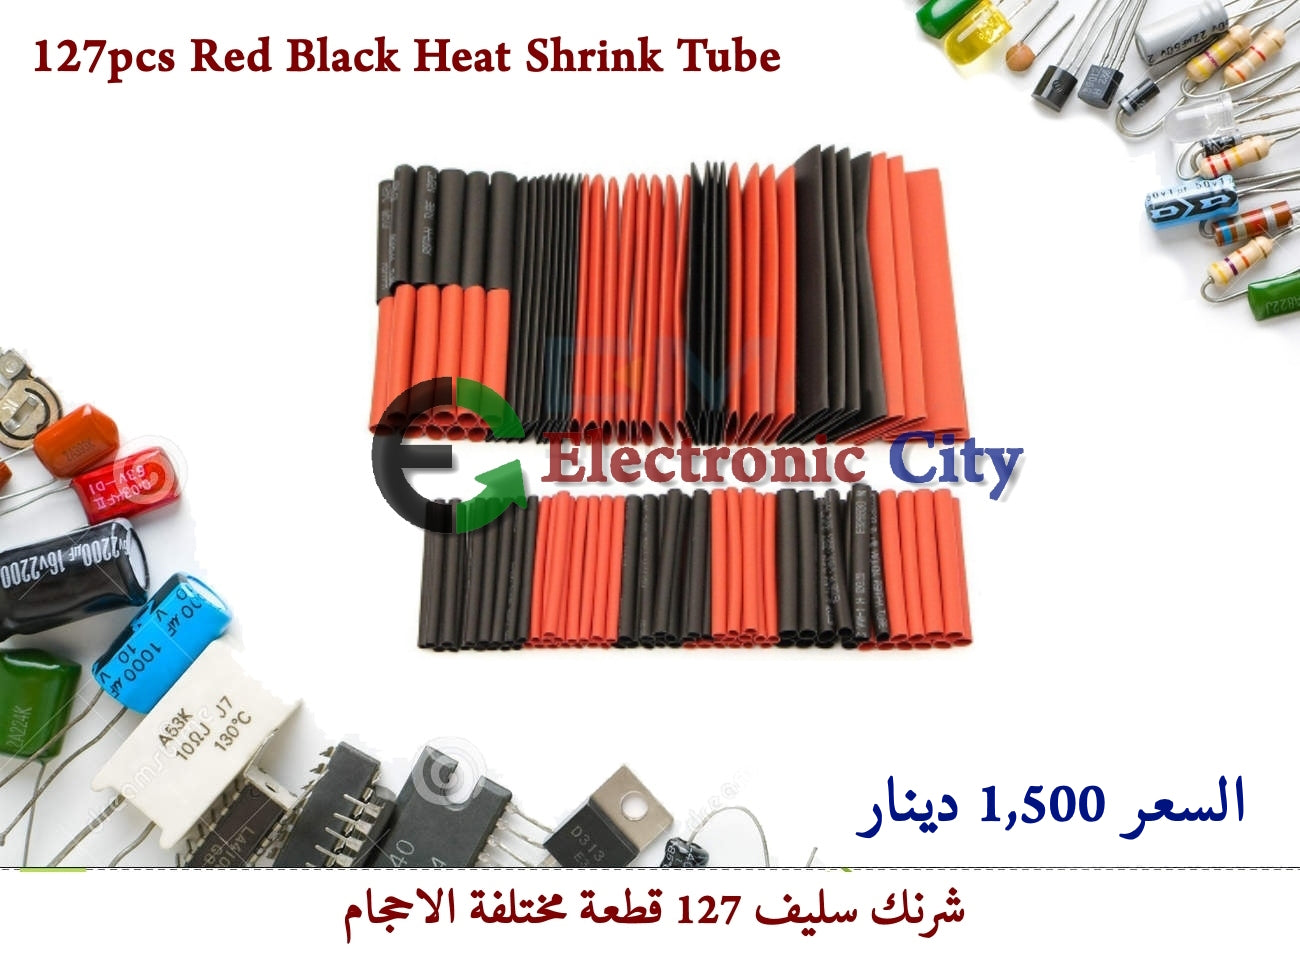 127pcs Red Black Heat Shrink Tube